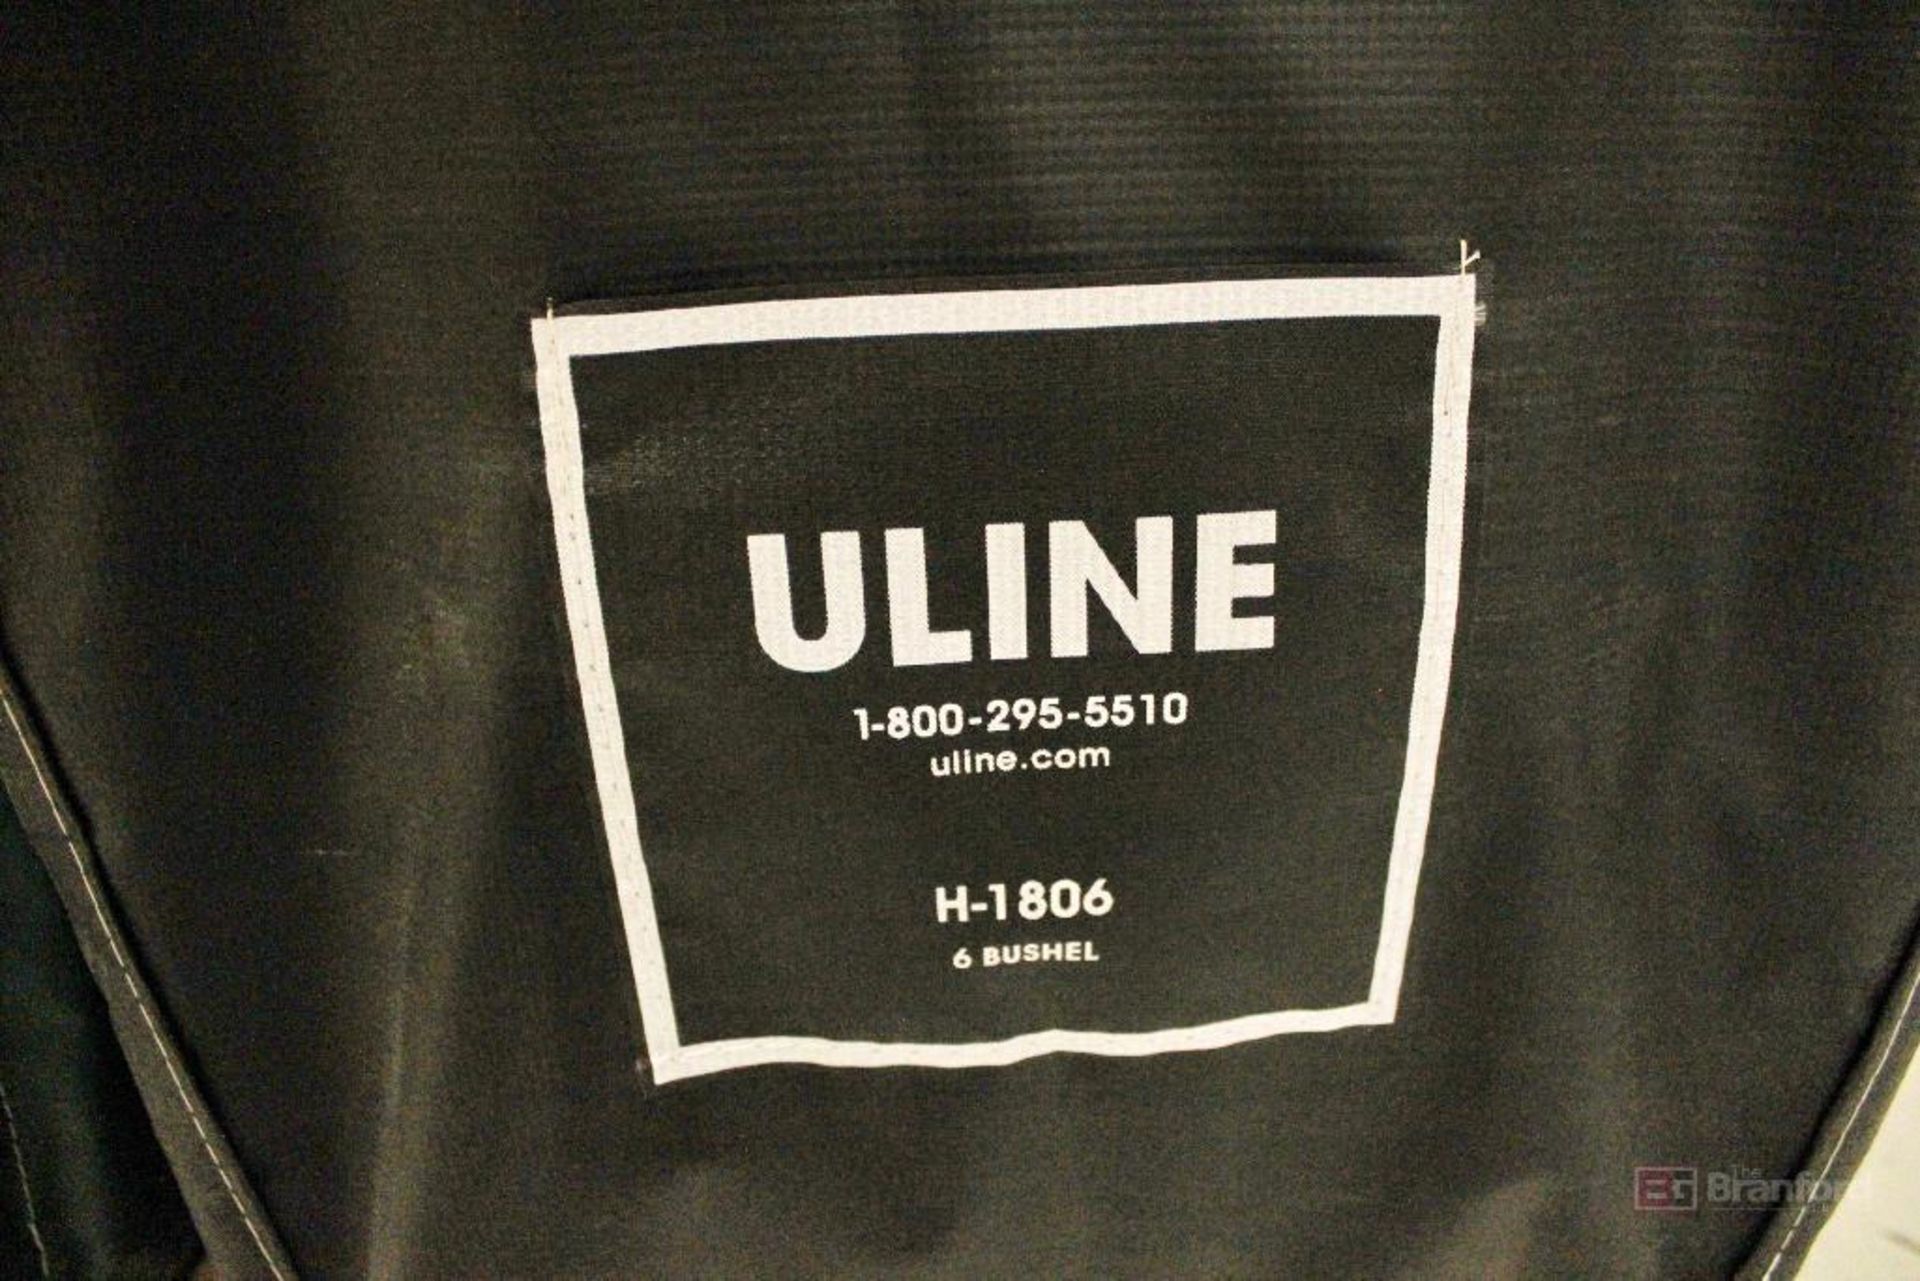 (4) Uline Carts, H-1806, Six Bushel Size - Image 2 of 2